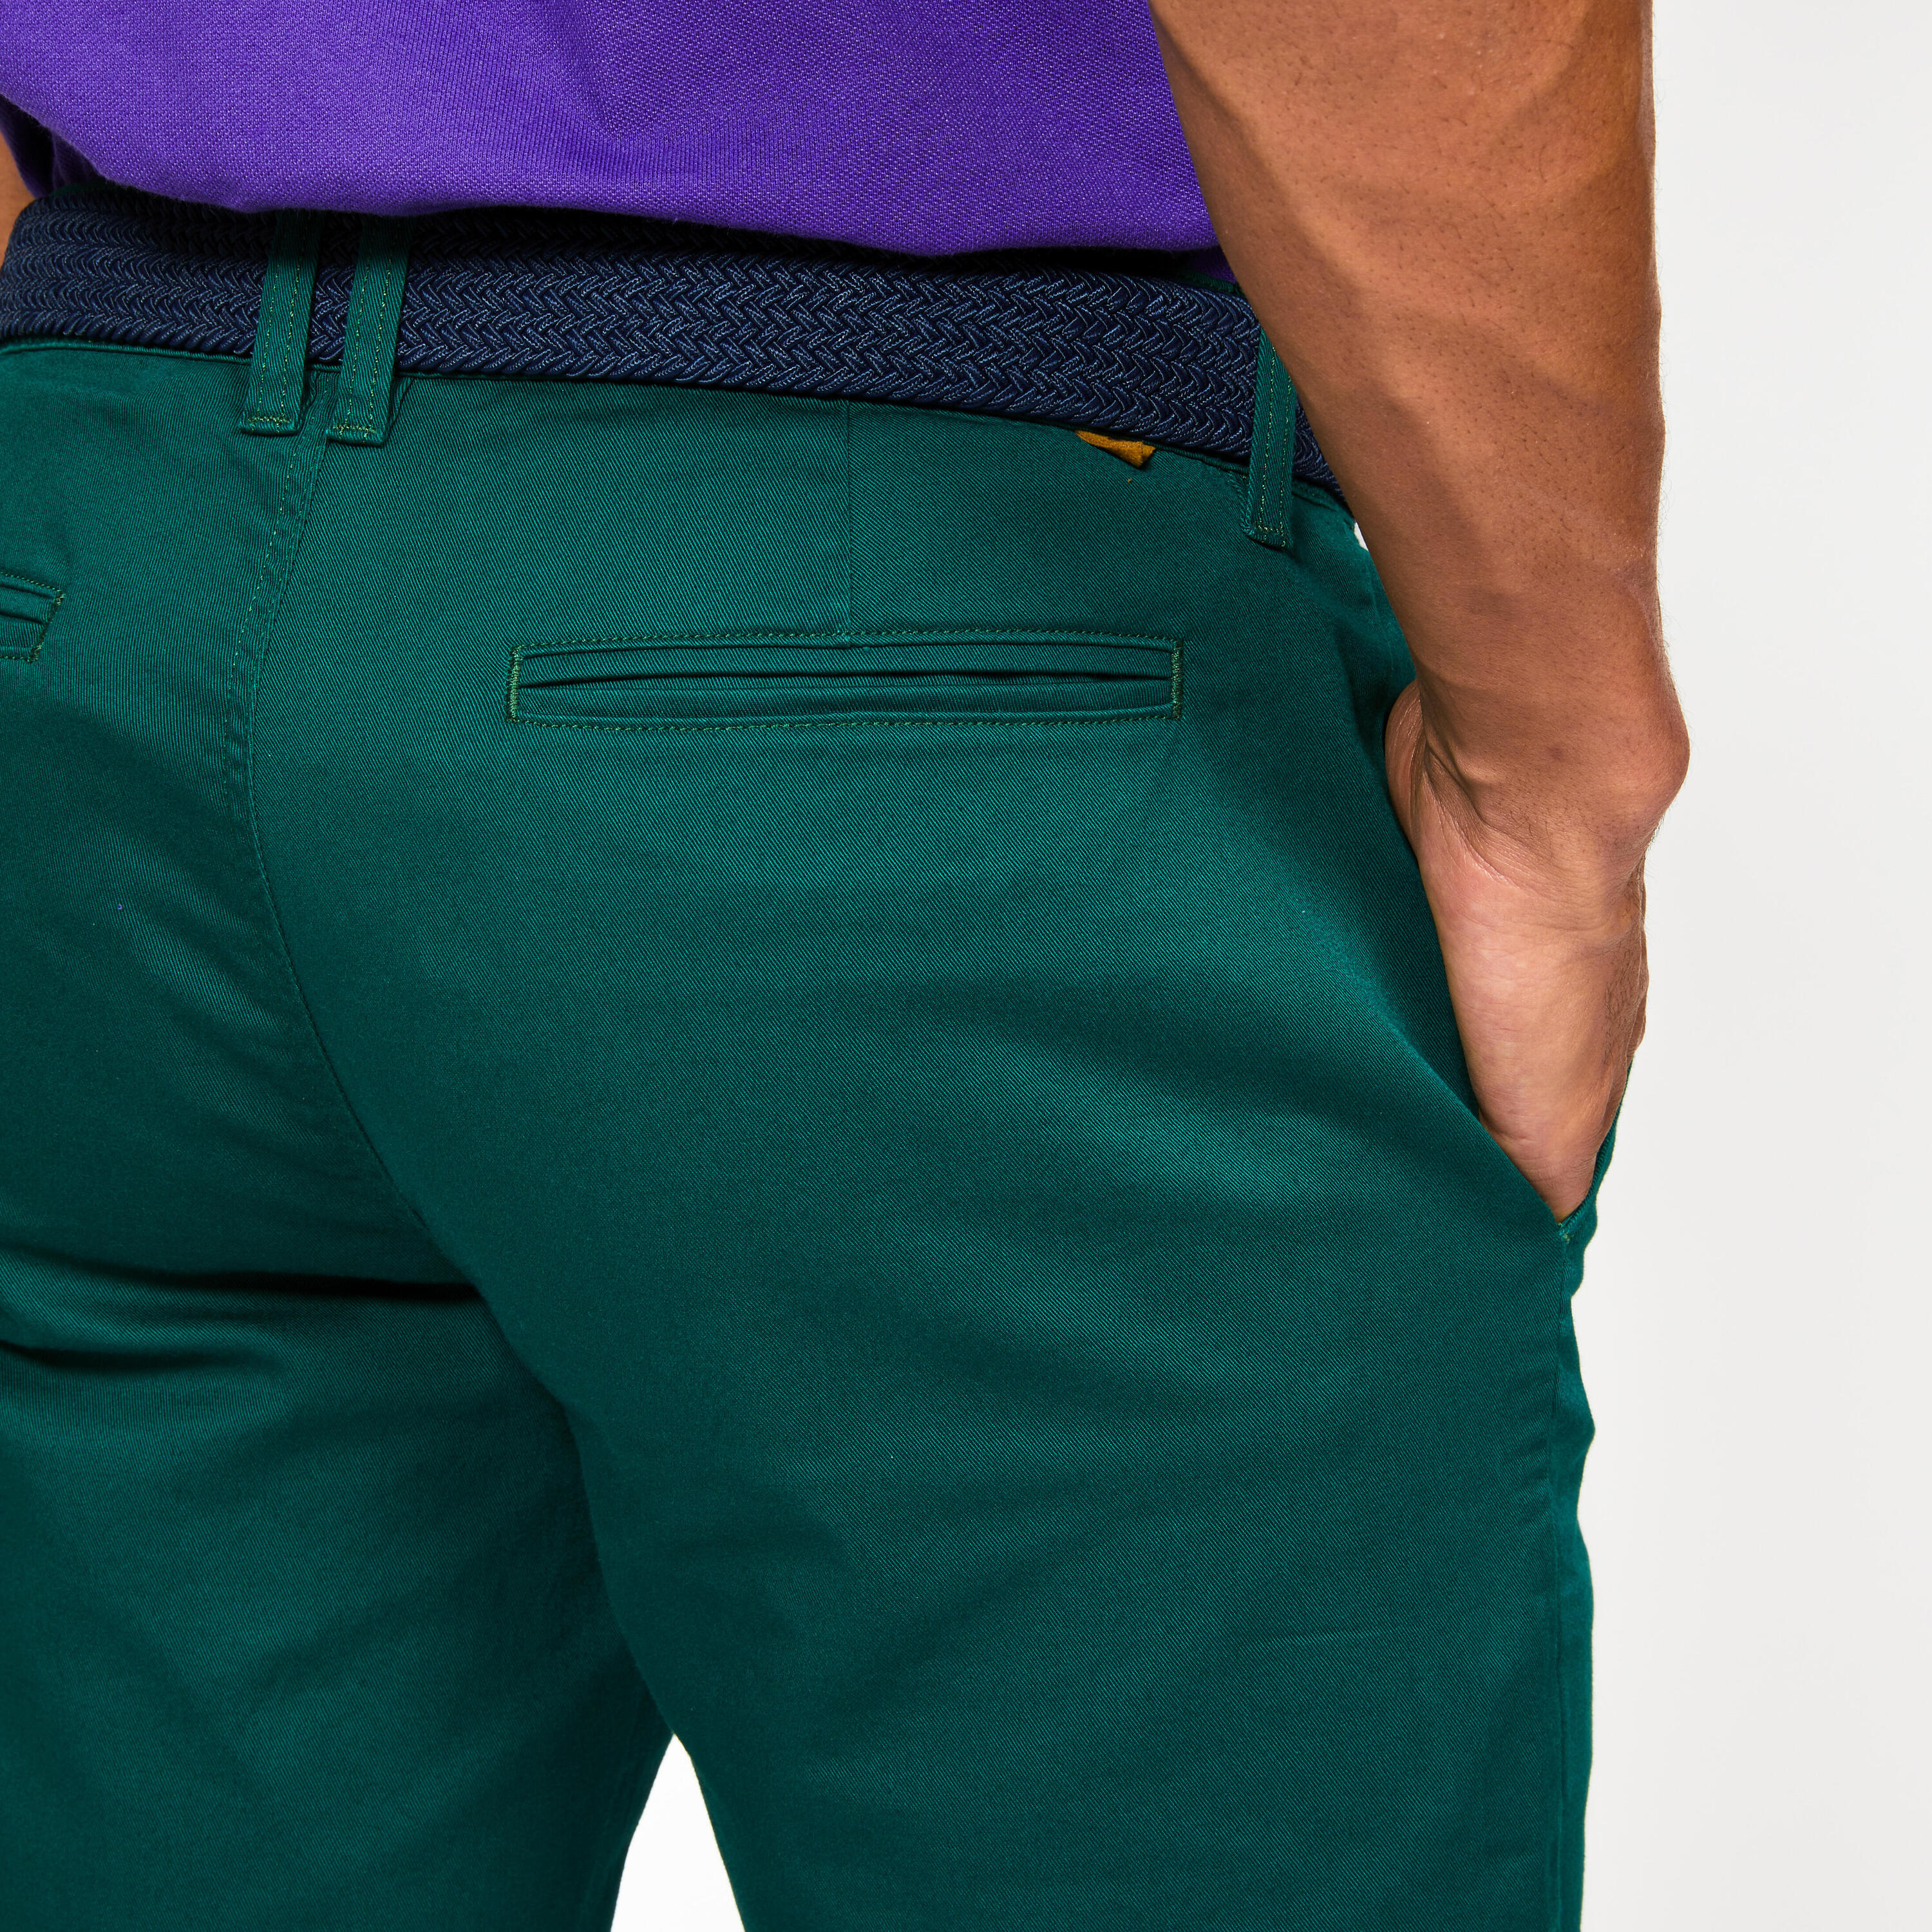 Men's golf chino shorts - MW500 cypress green 4/4